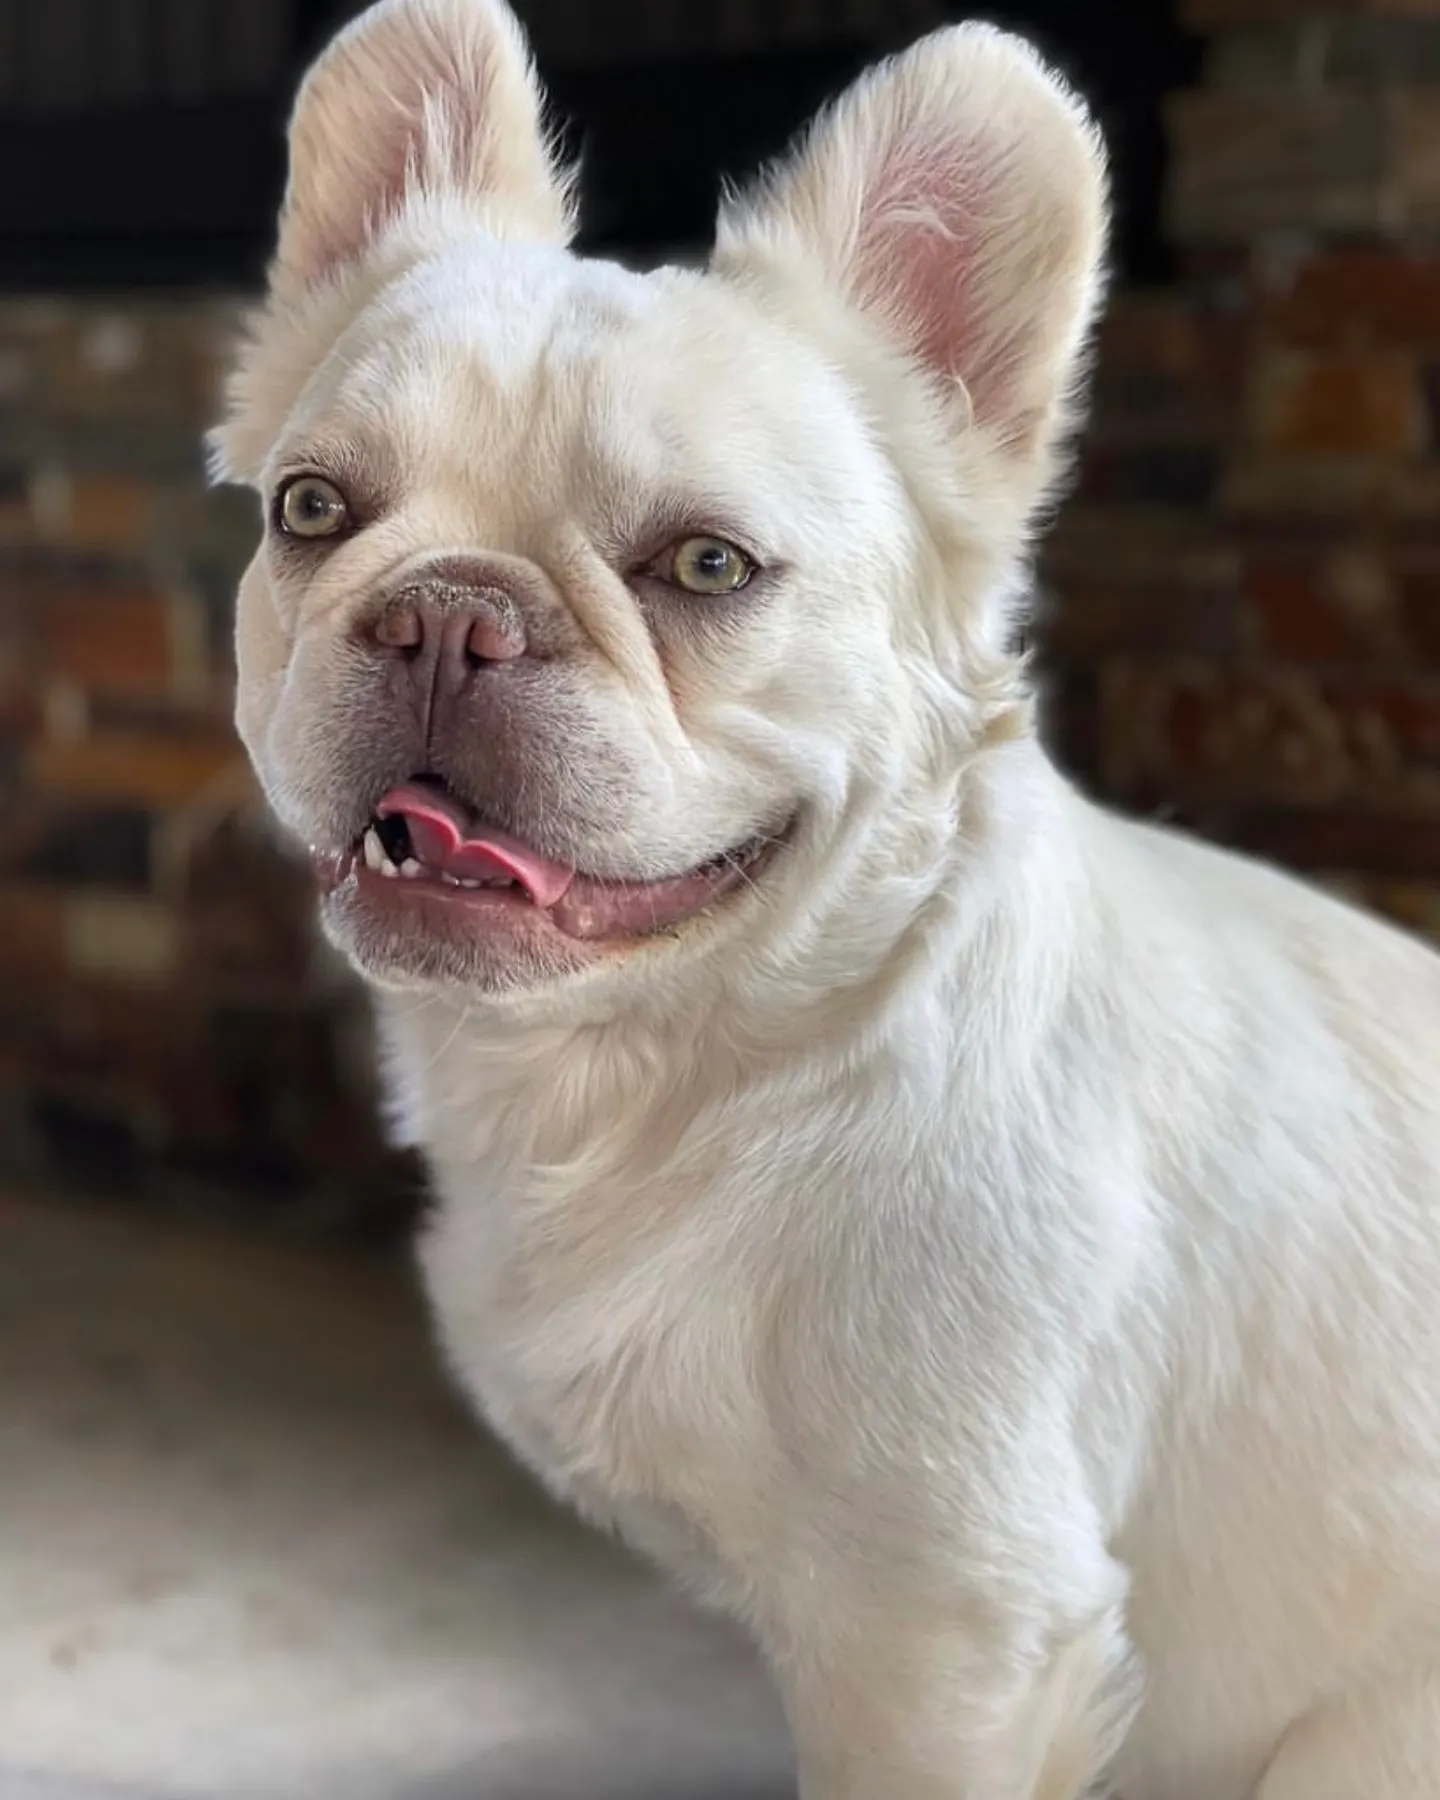 A fluffy french bulldog smiling at the camera